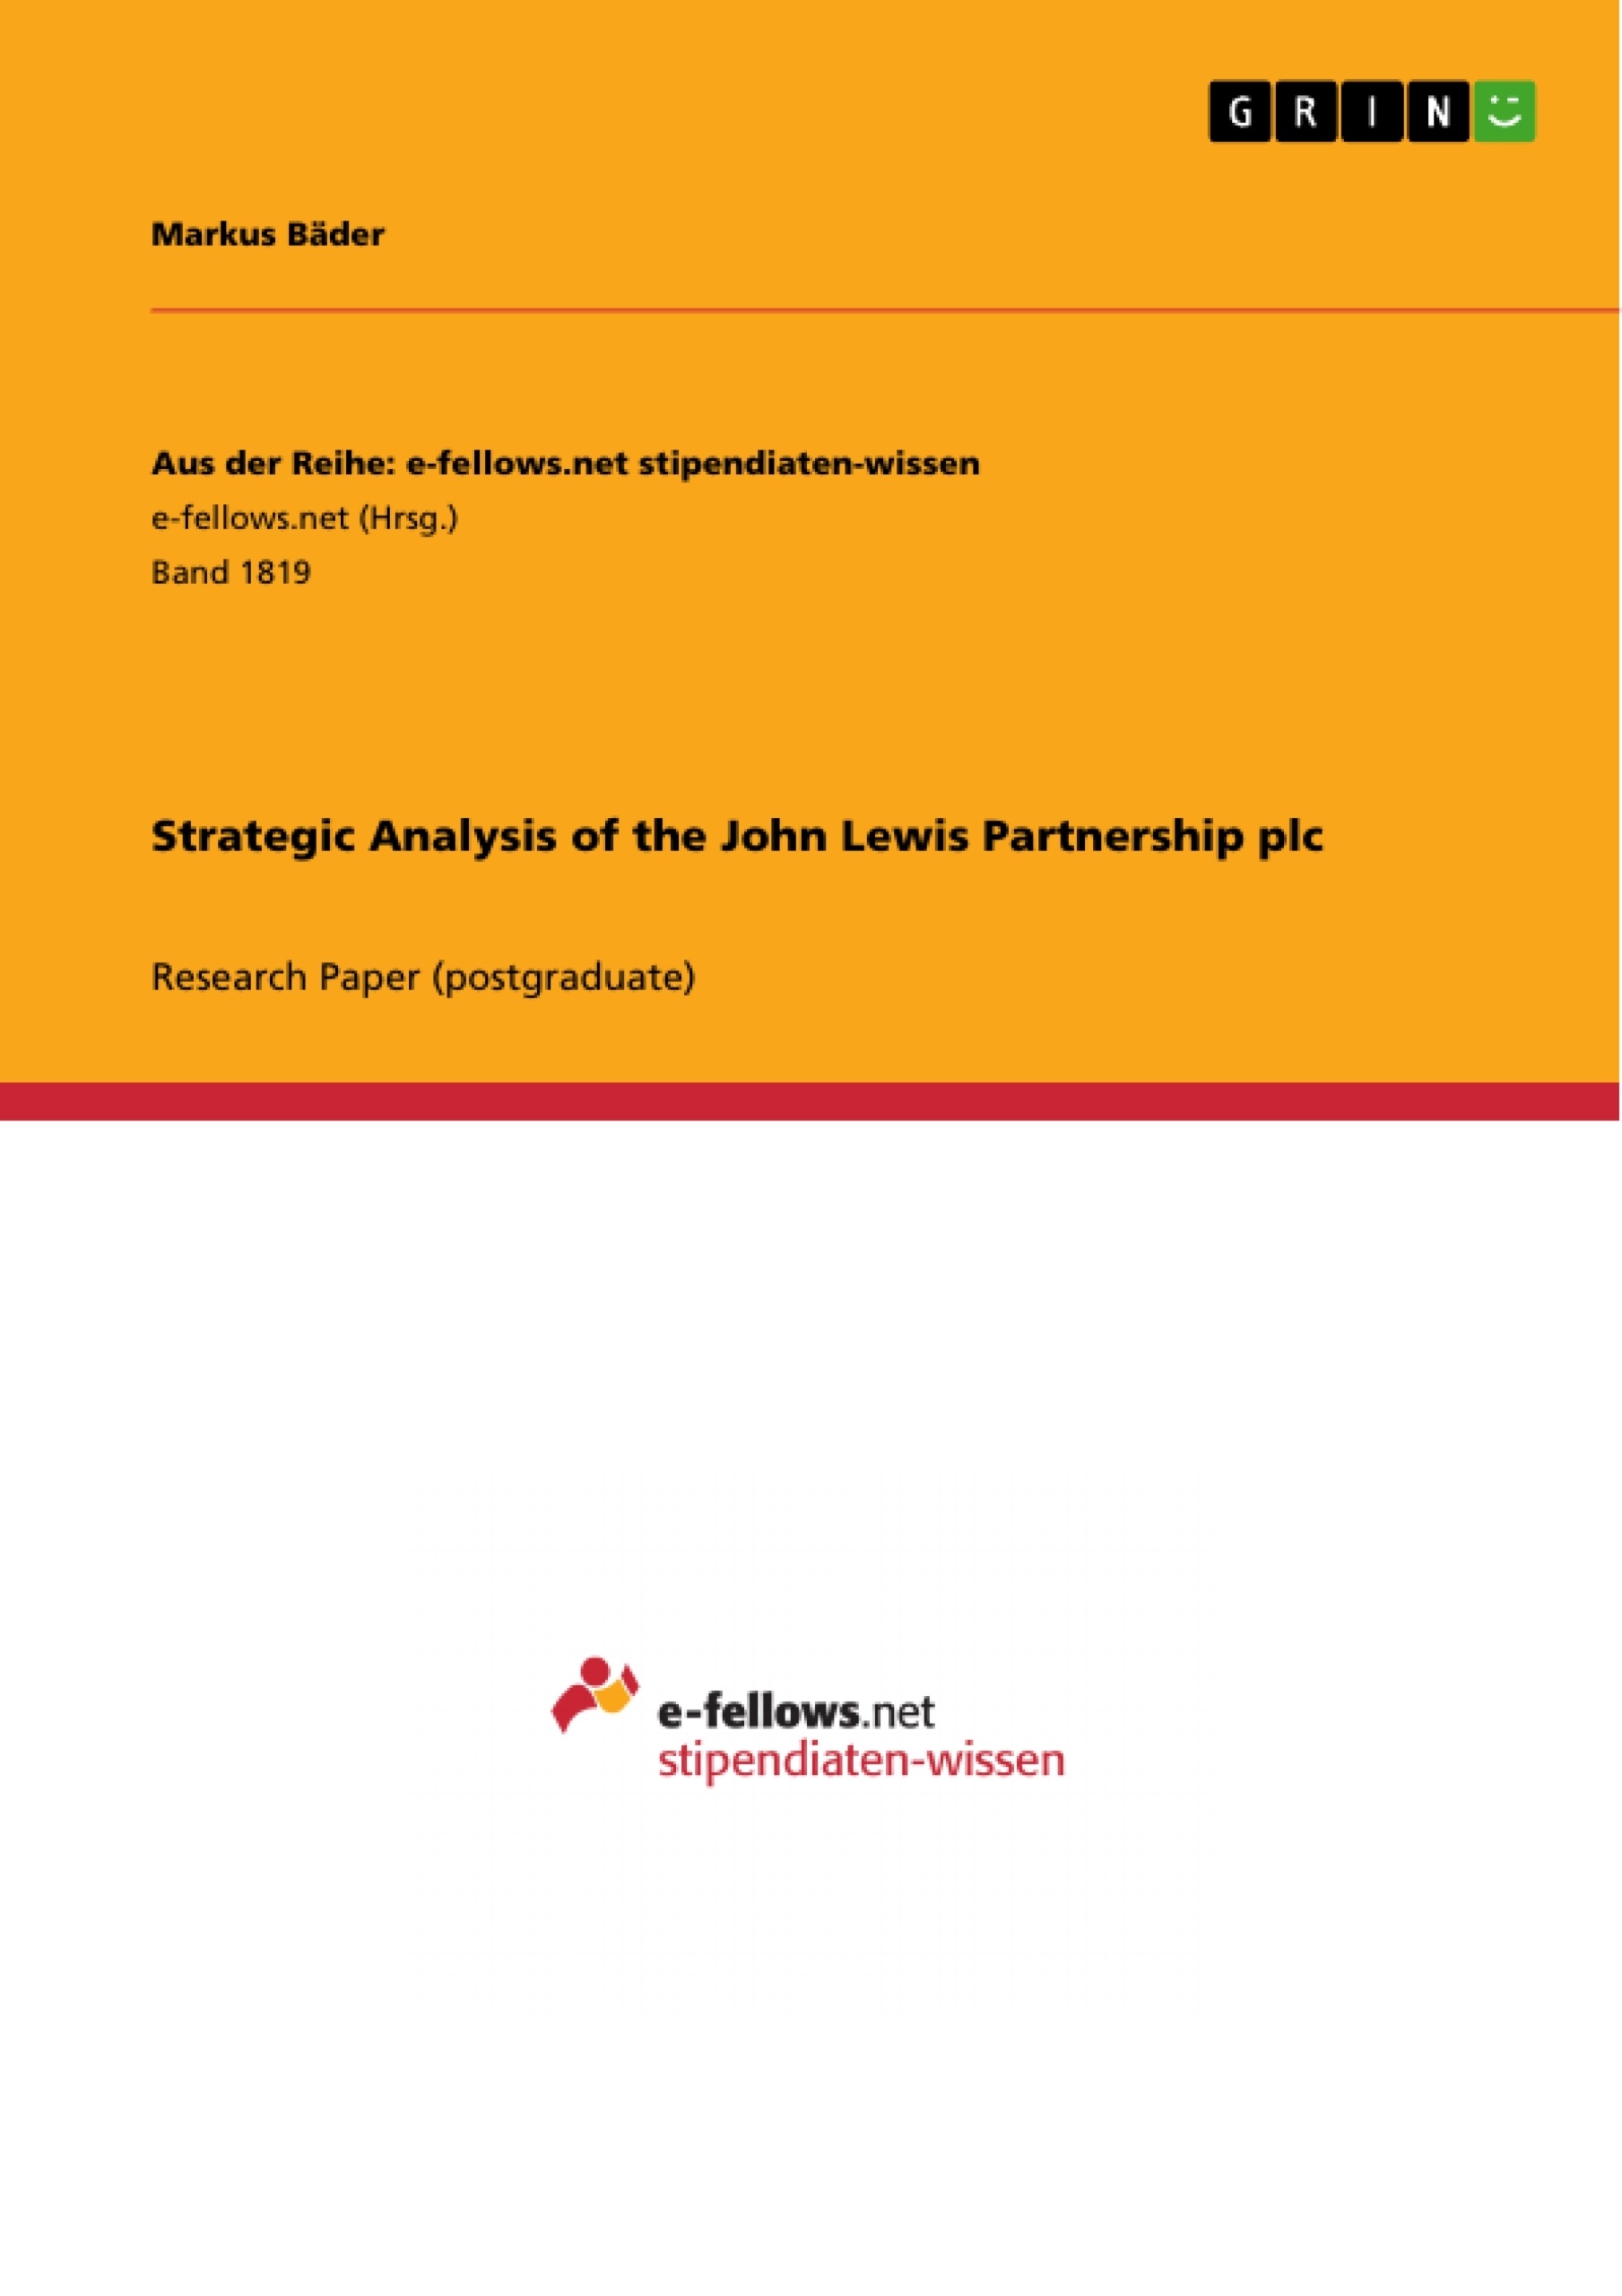 Title: Strategic Analysis of the John Lewis Partnership plc